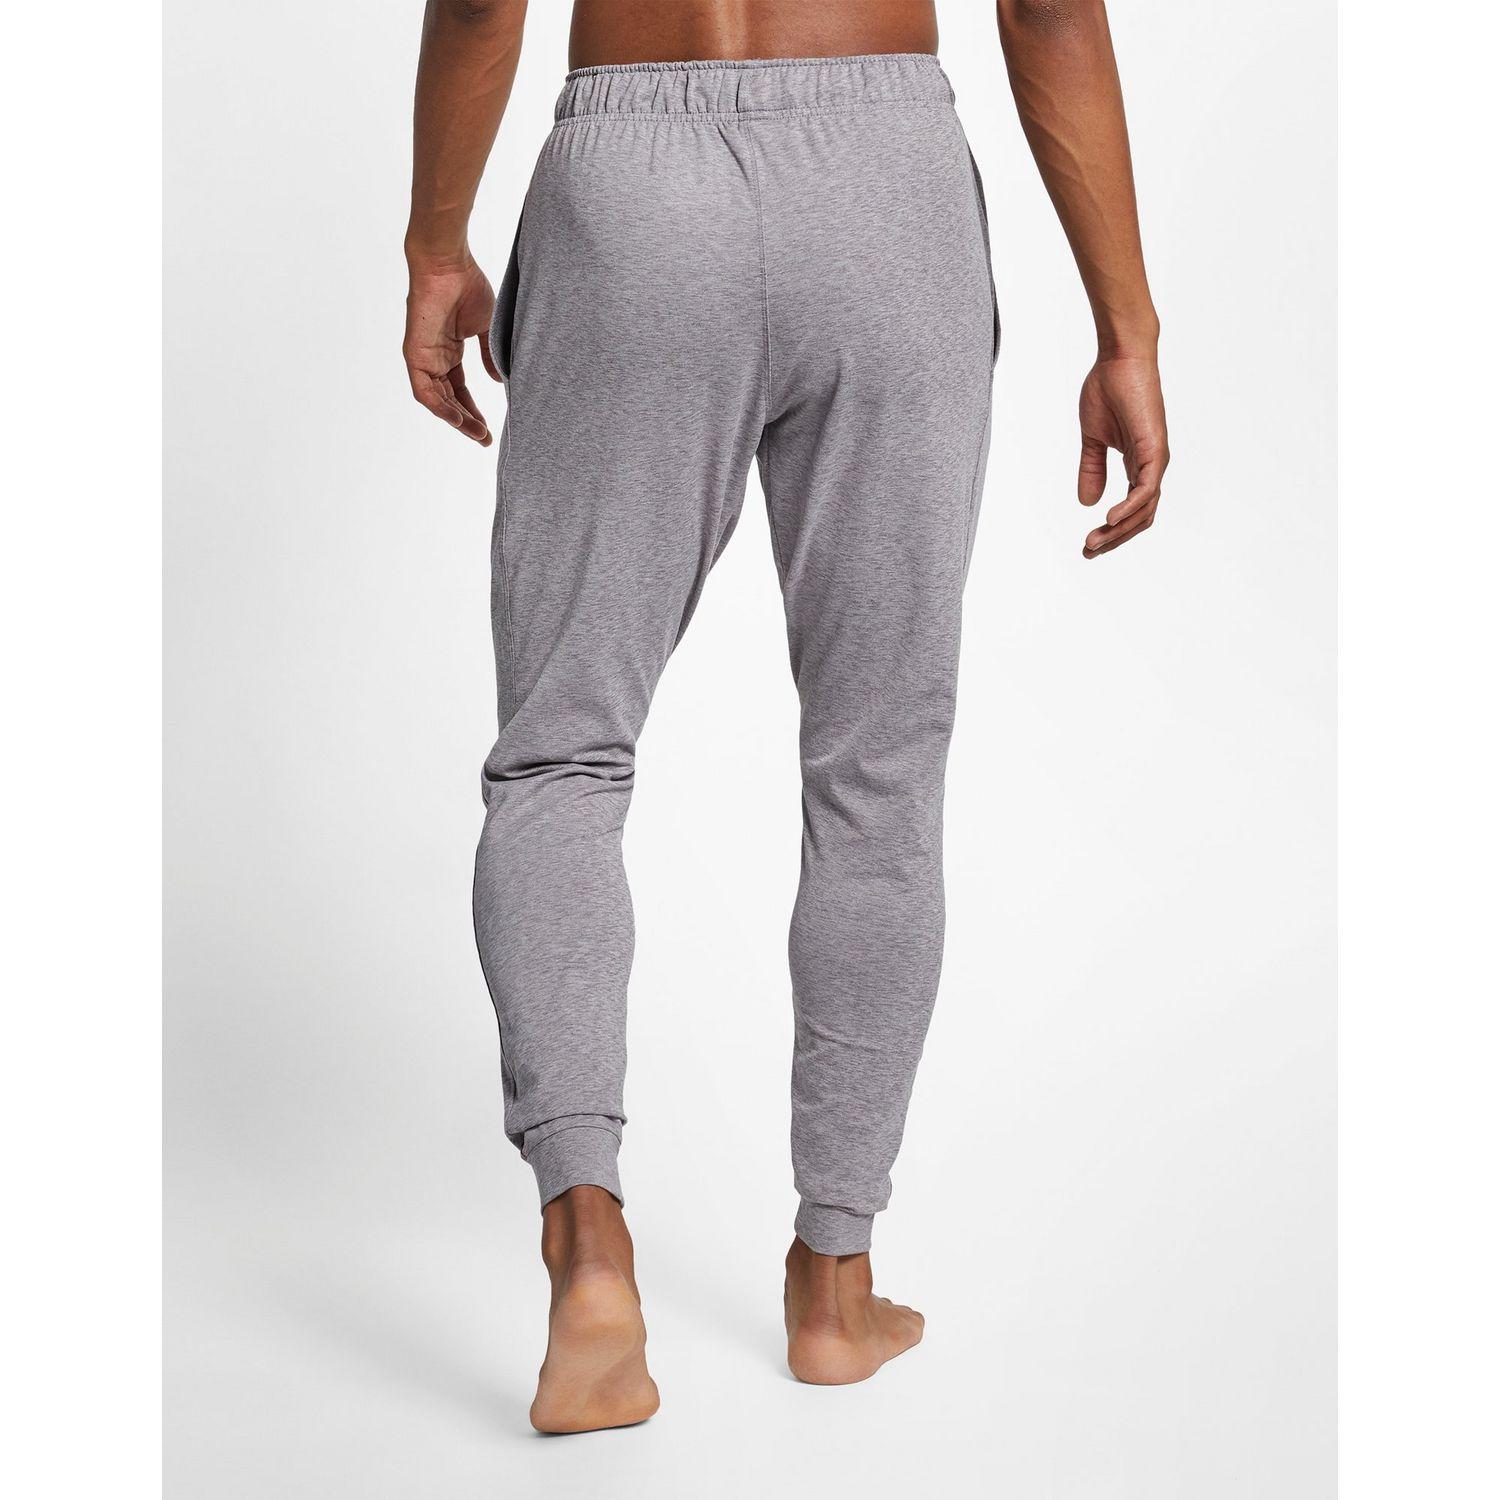 Nike Dri-fit Men's Yoga Trousers for Men - Lyst